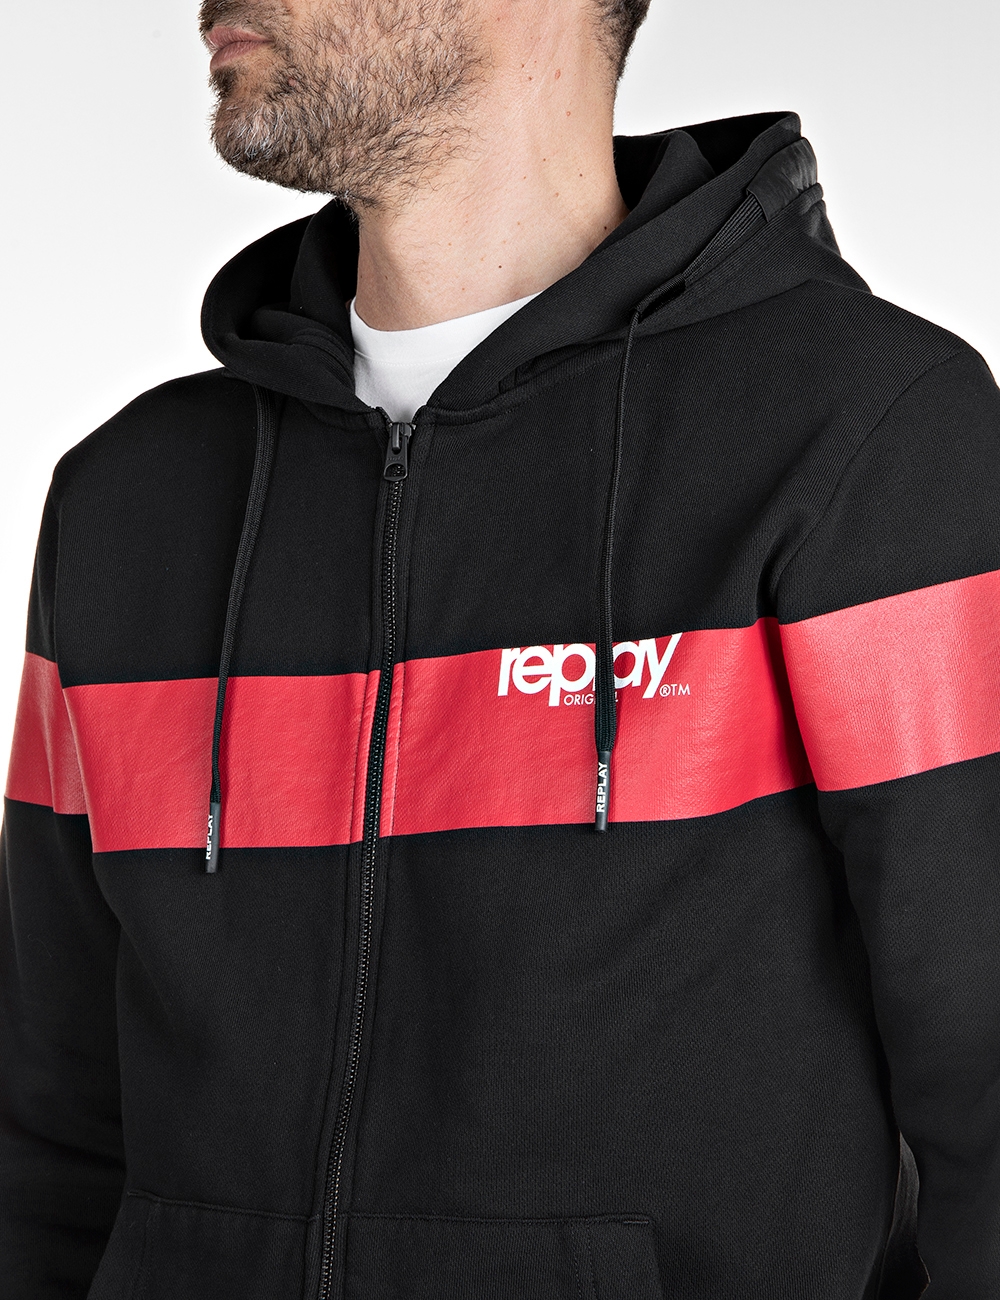 REPLAY | REPLAY sweatshirt with hood and zipper